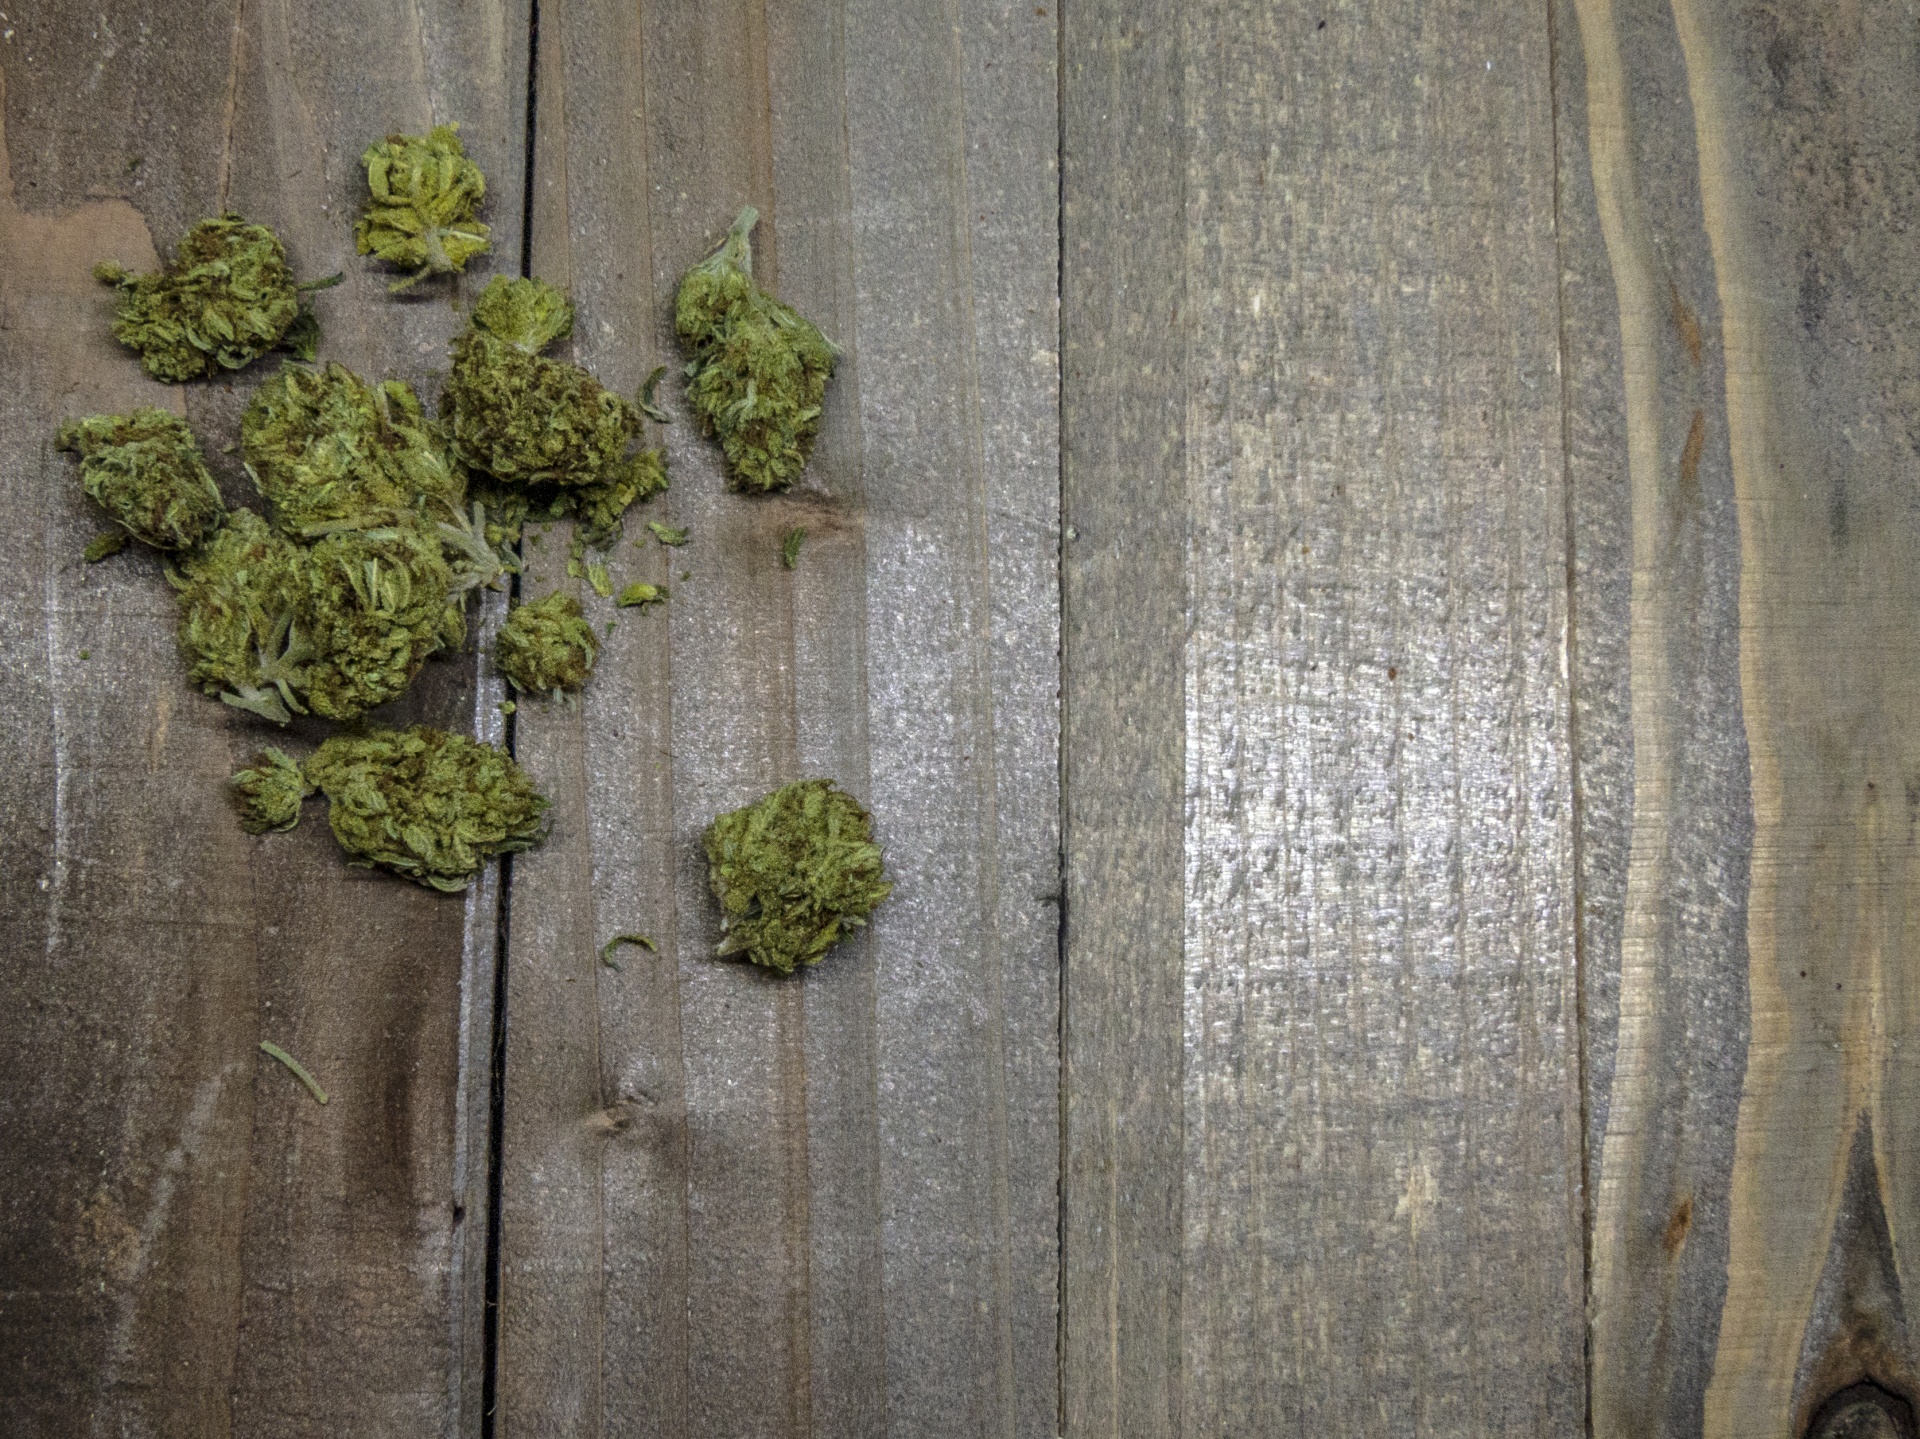 Marijuana Buds And Twigs